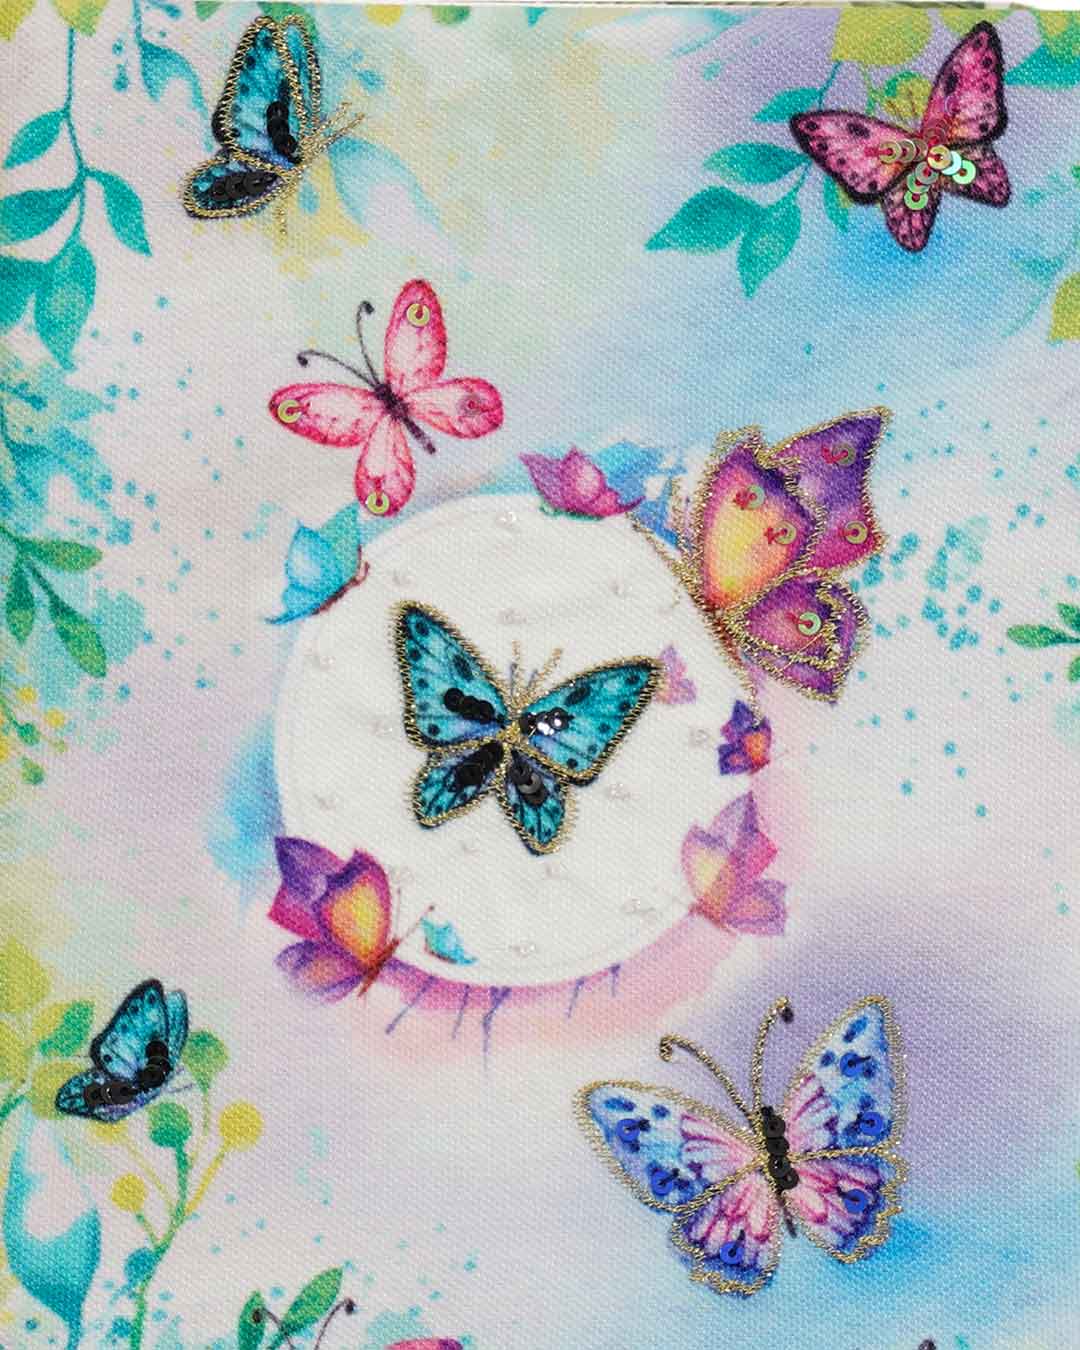 Papilio Fabric Notebook 8 X 6"